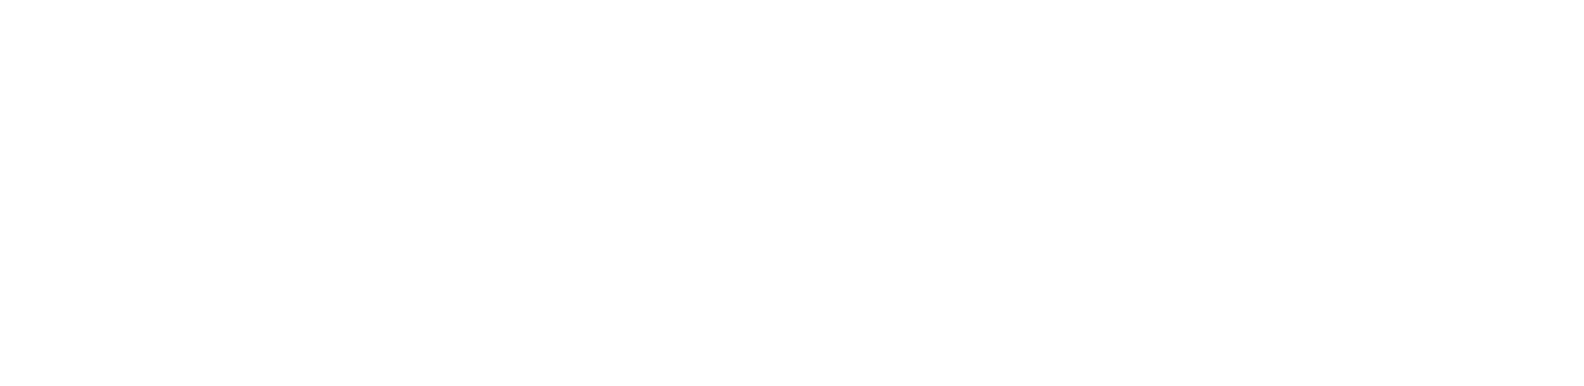 Bachoco
 logo large for dark backgrounds (transparent PNG)